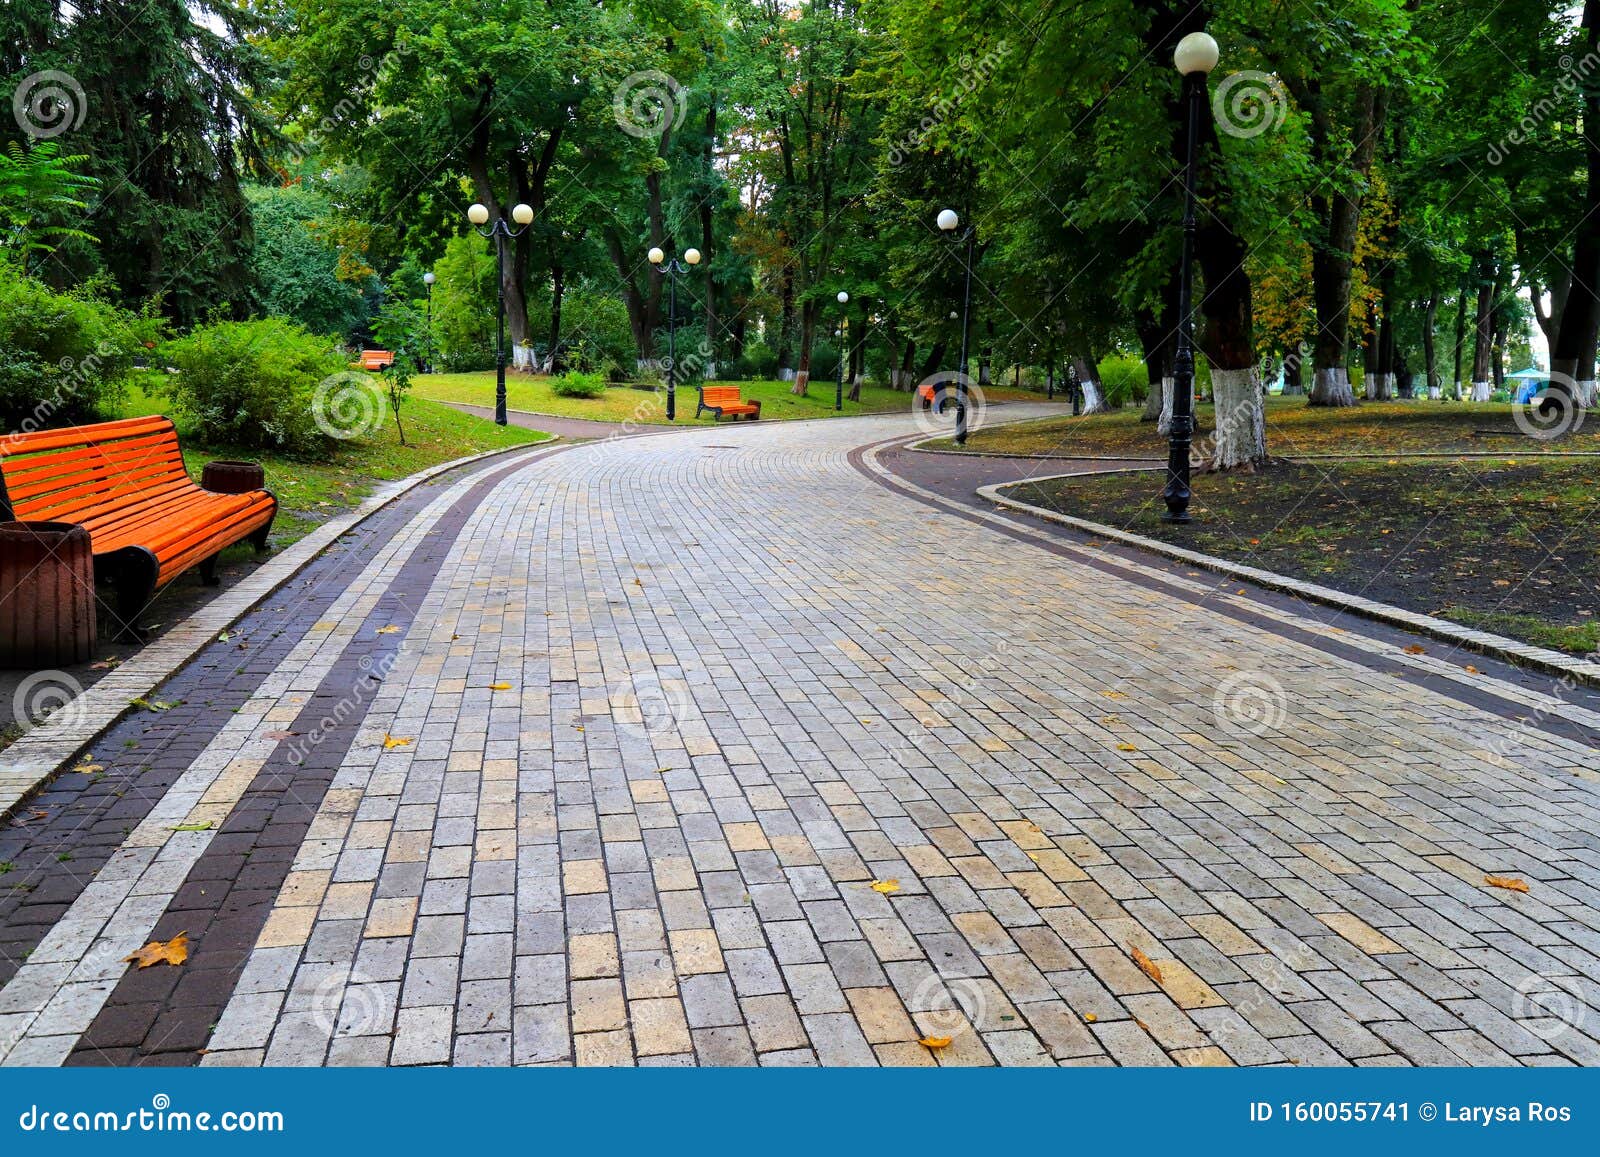 gray stone walkway in the morning autumn park with orange benches. mariinsky park near the parliament of ukraine, verkhovna rada,